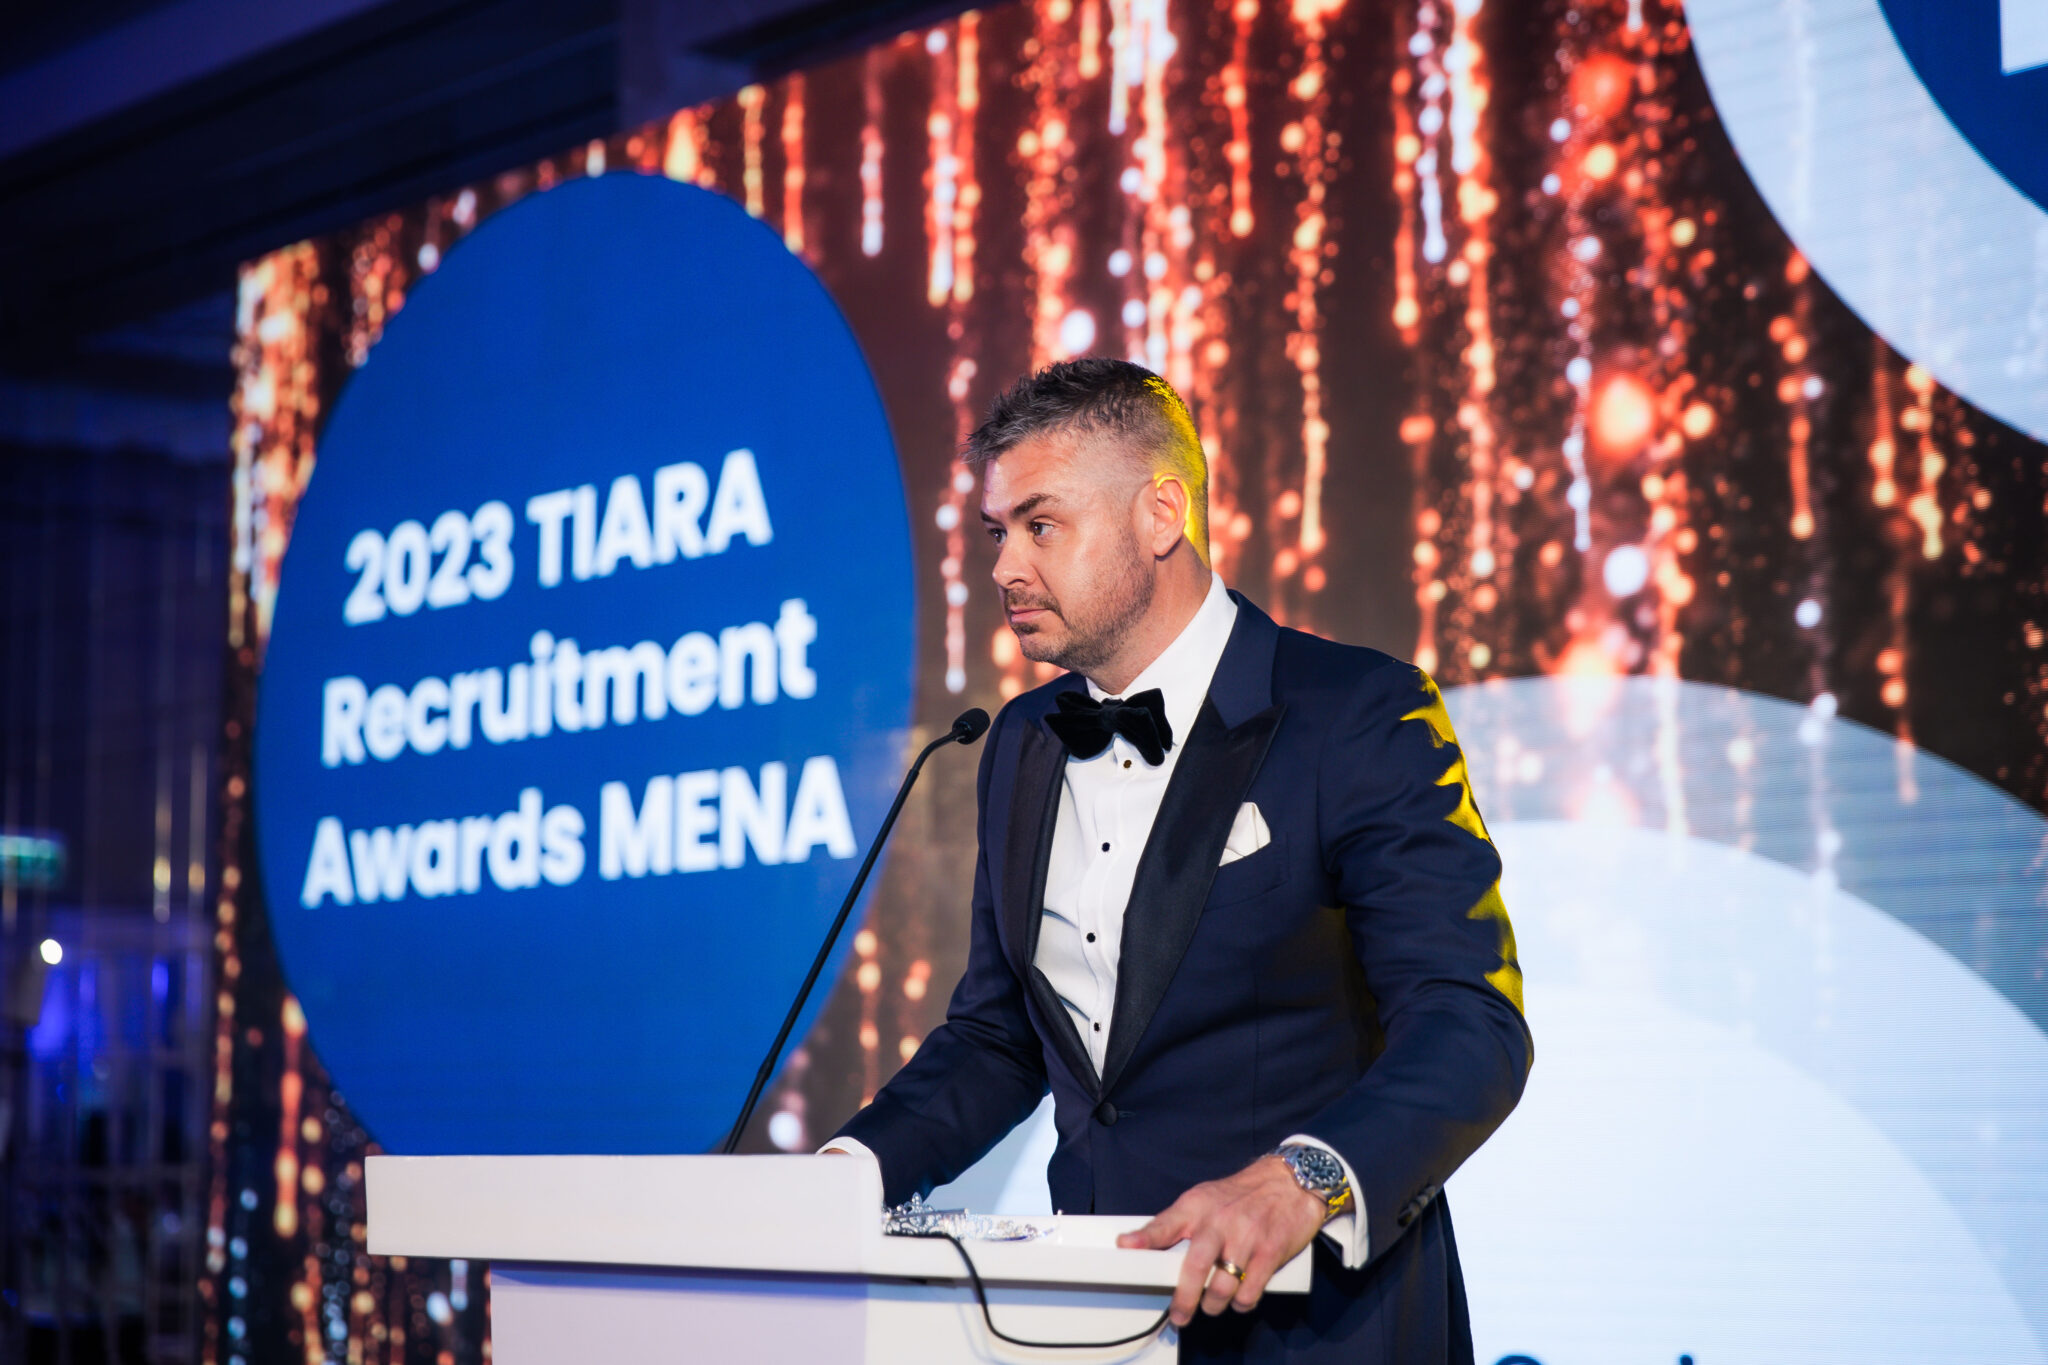 TIARA Recruitment Awards MENA